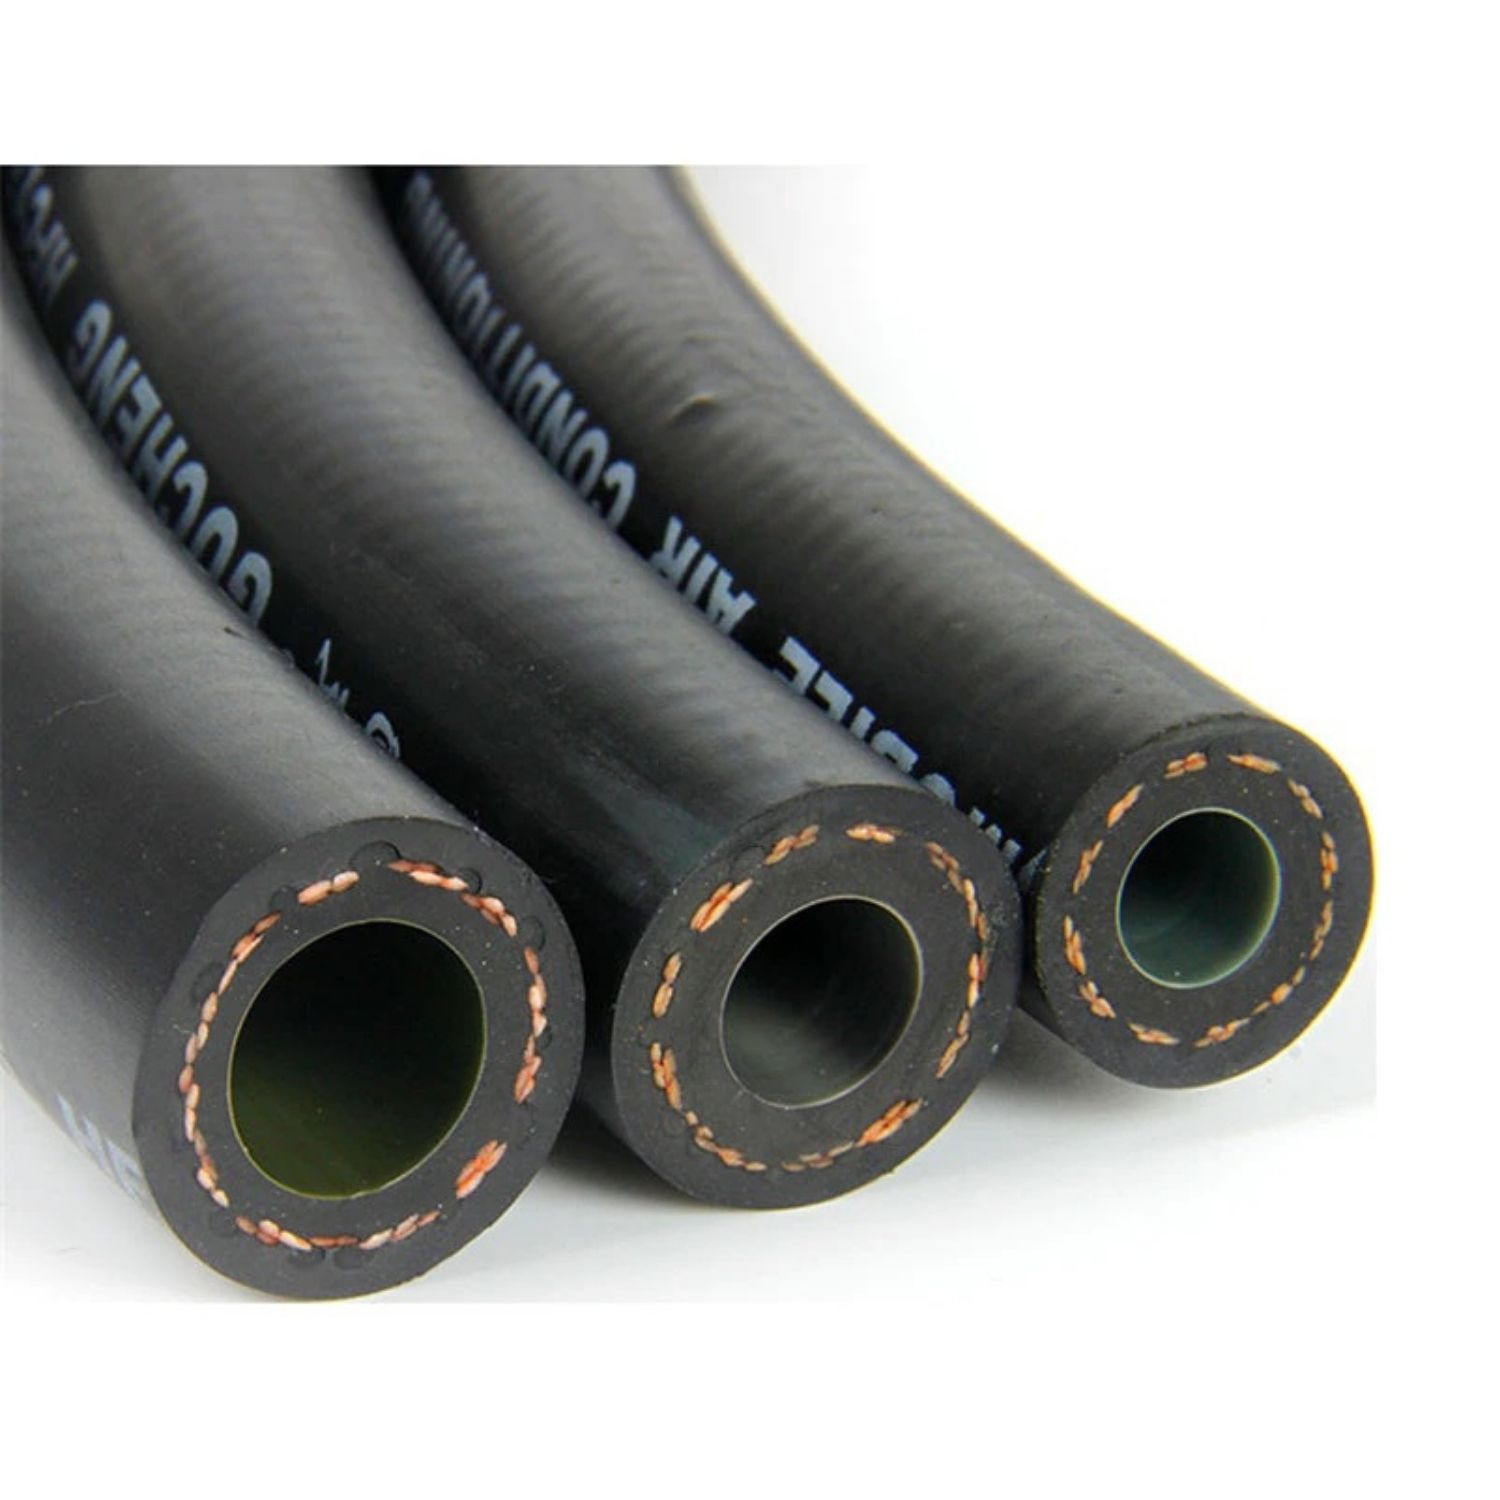 Rubber hose with steel fiber